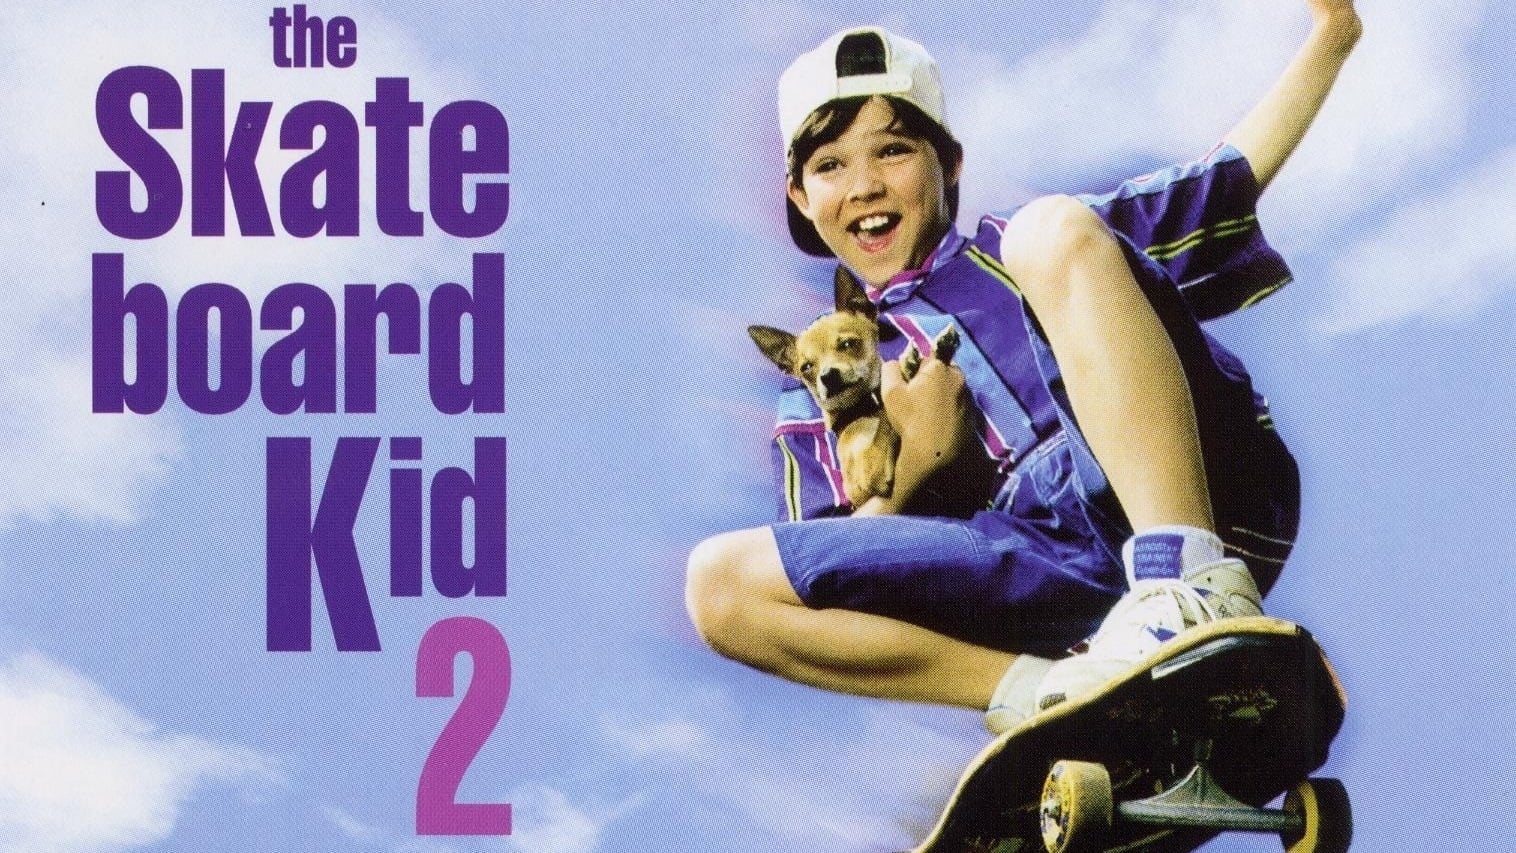 The Skateboard Kid II 1995 123movies